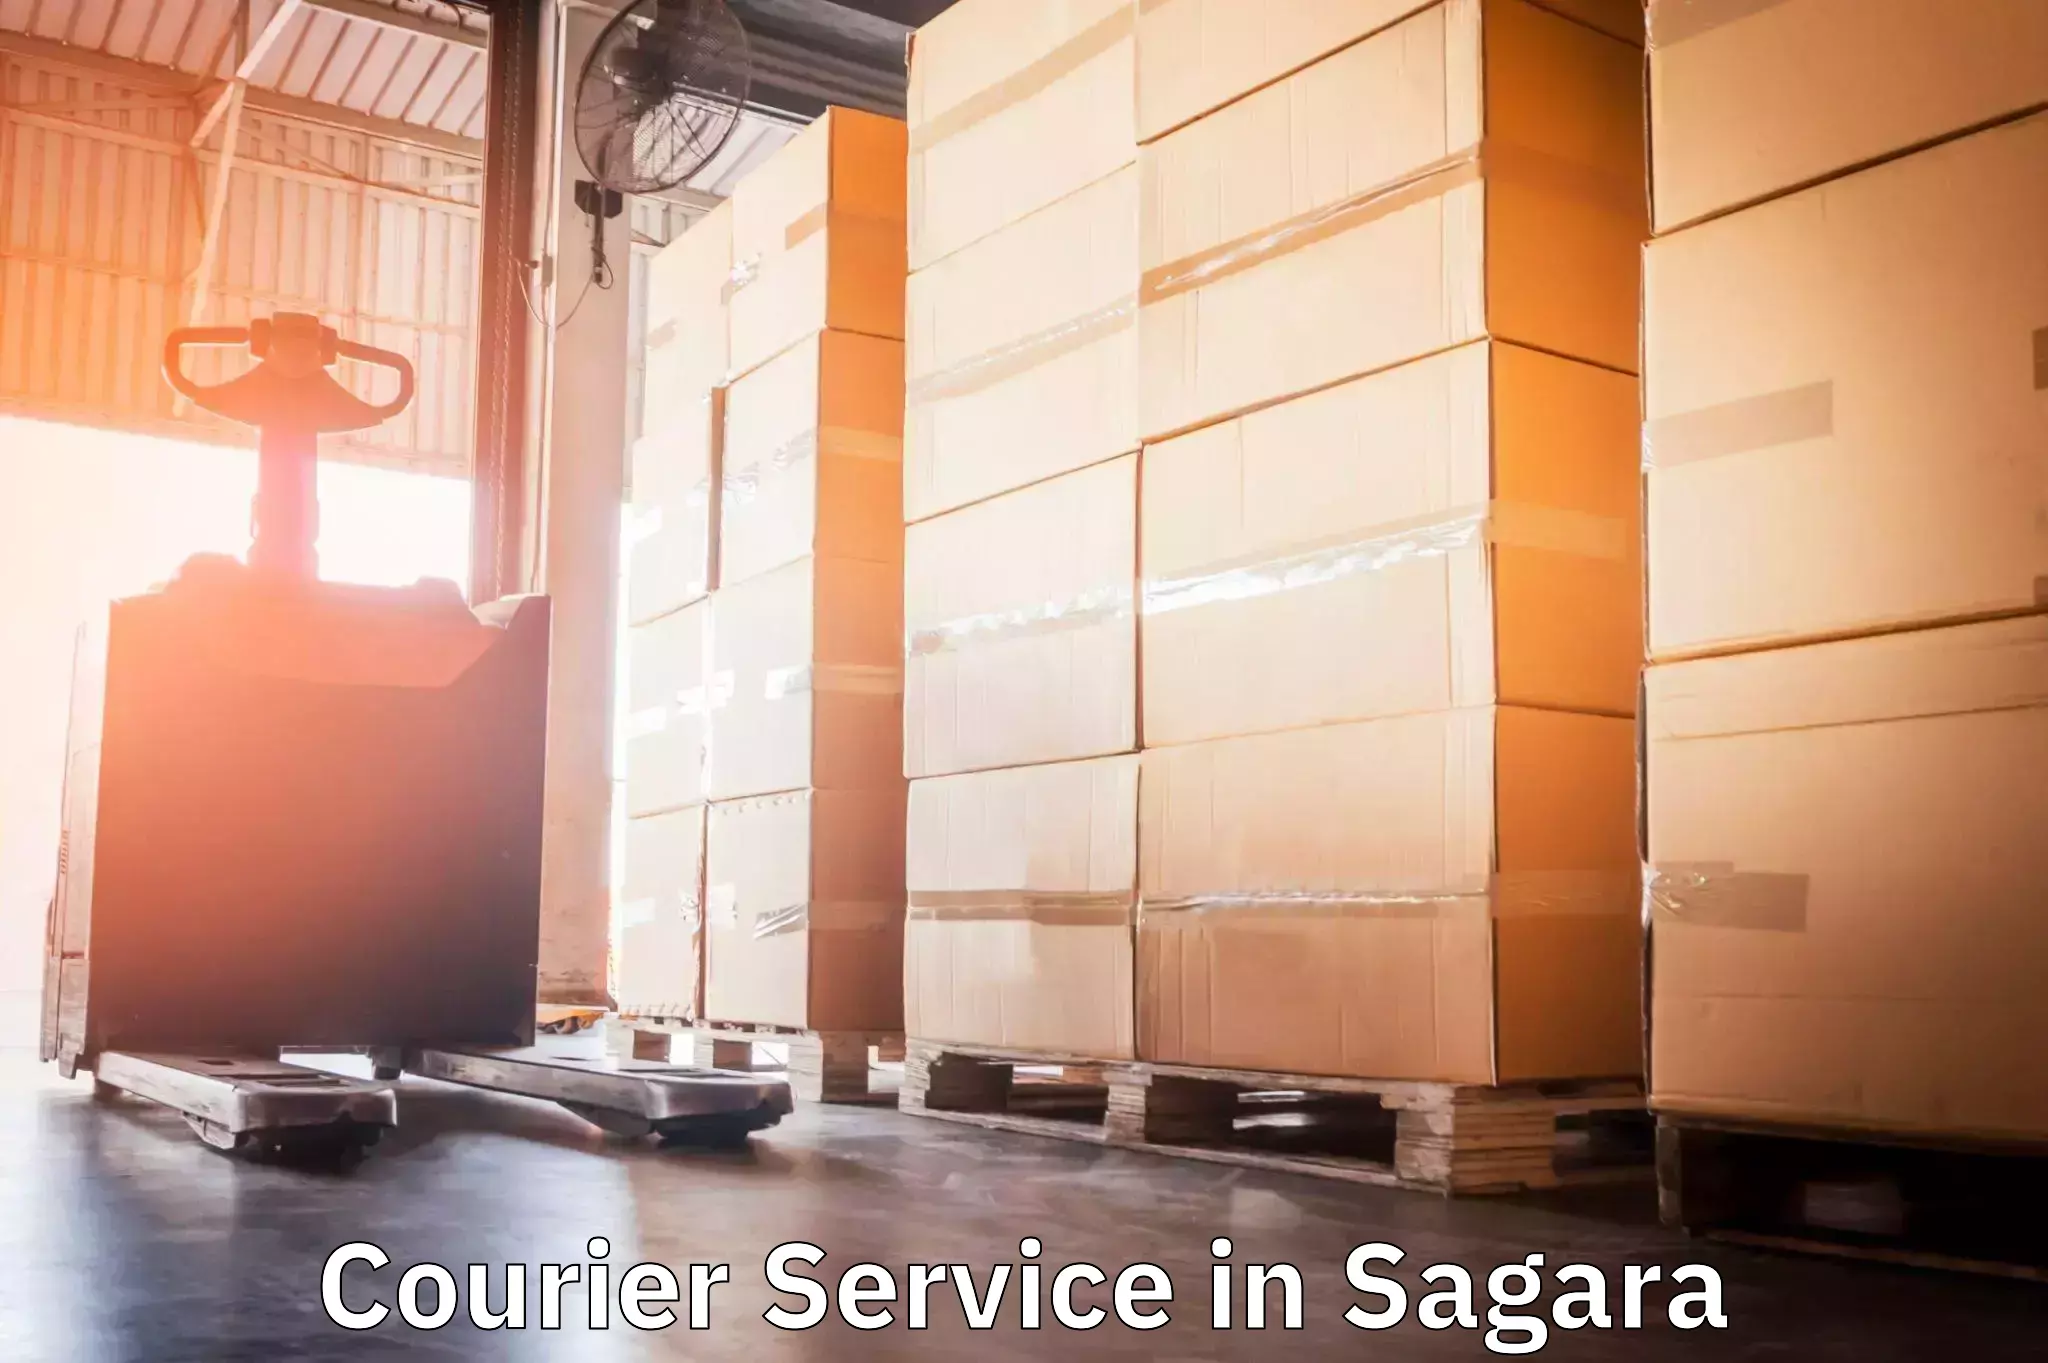 Emergency parcel delivery in Sagara